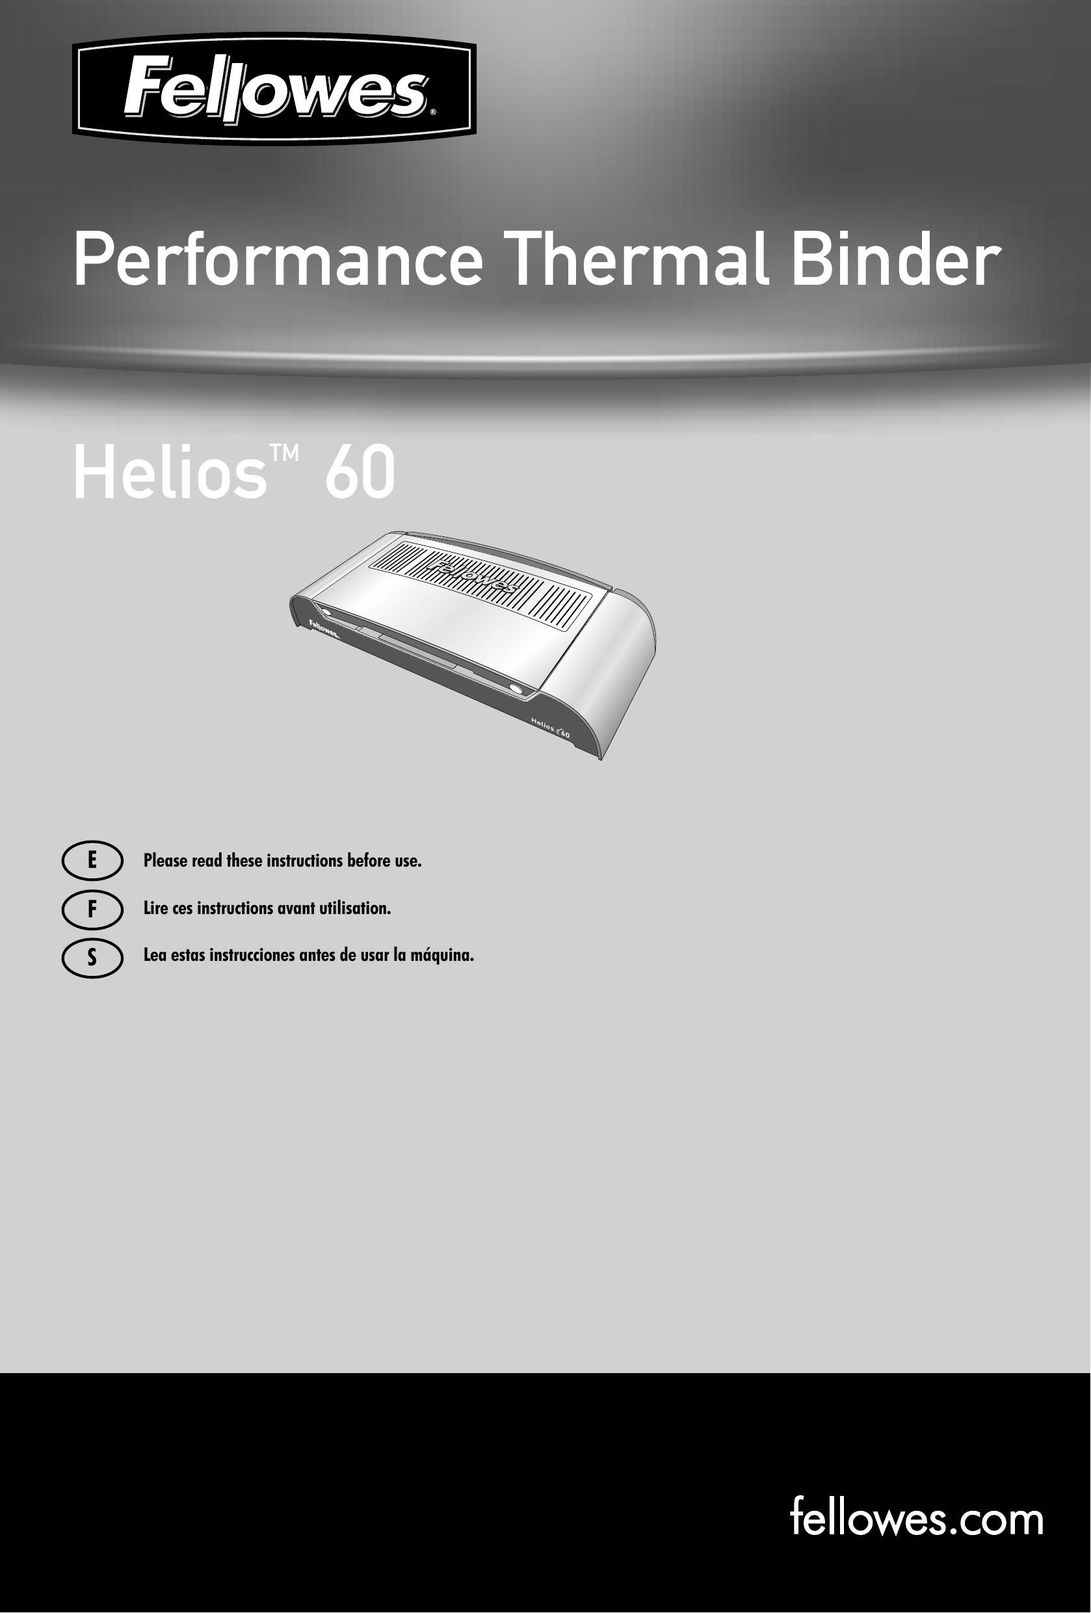 Fellowes helios 60 Binding Machine User Manual